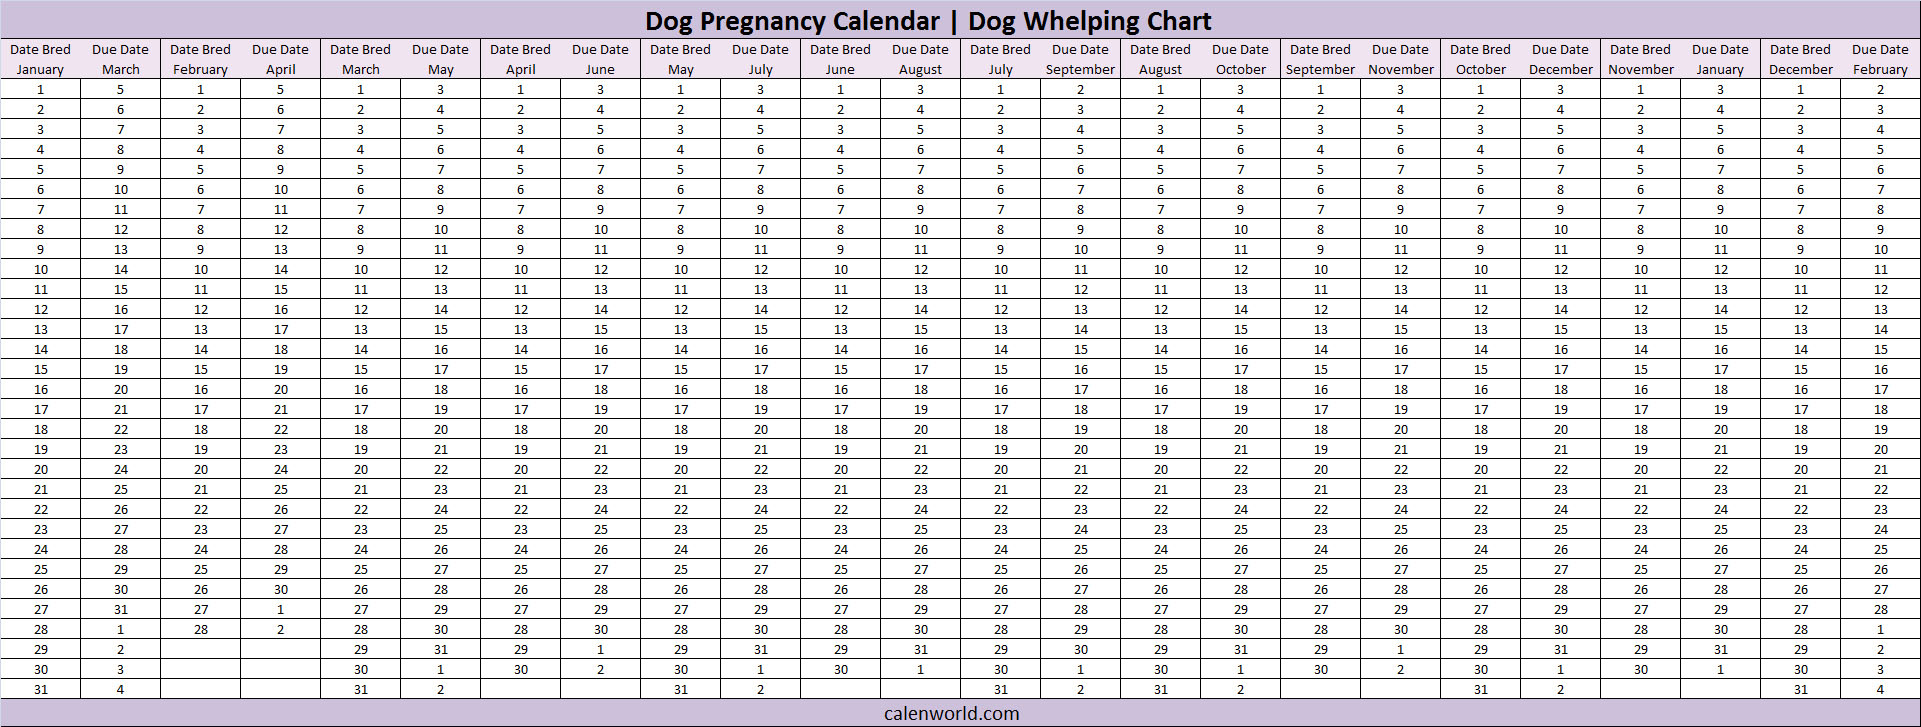 Dog Whelping Chart